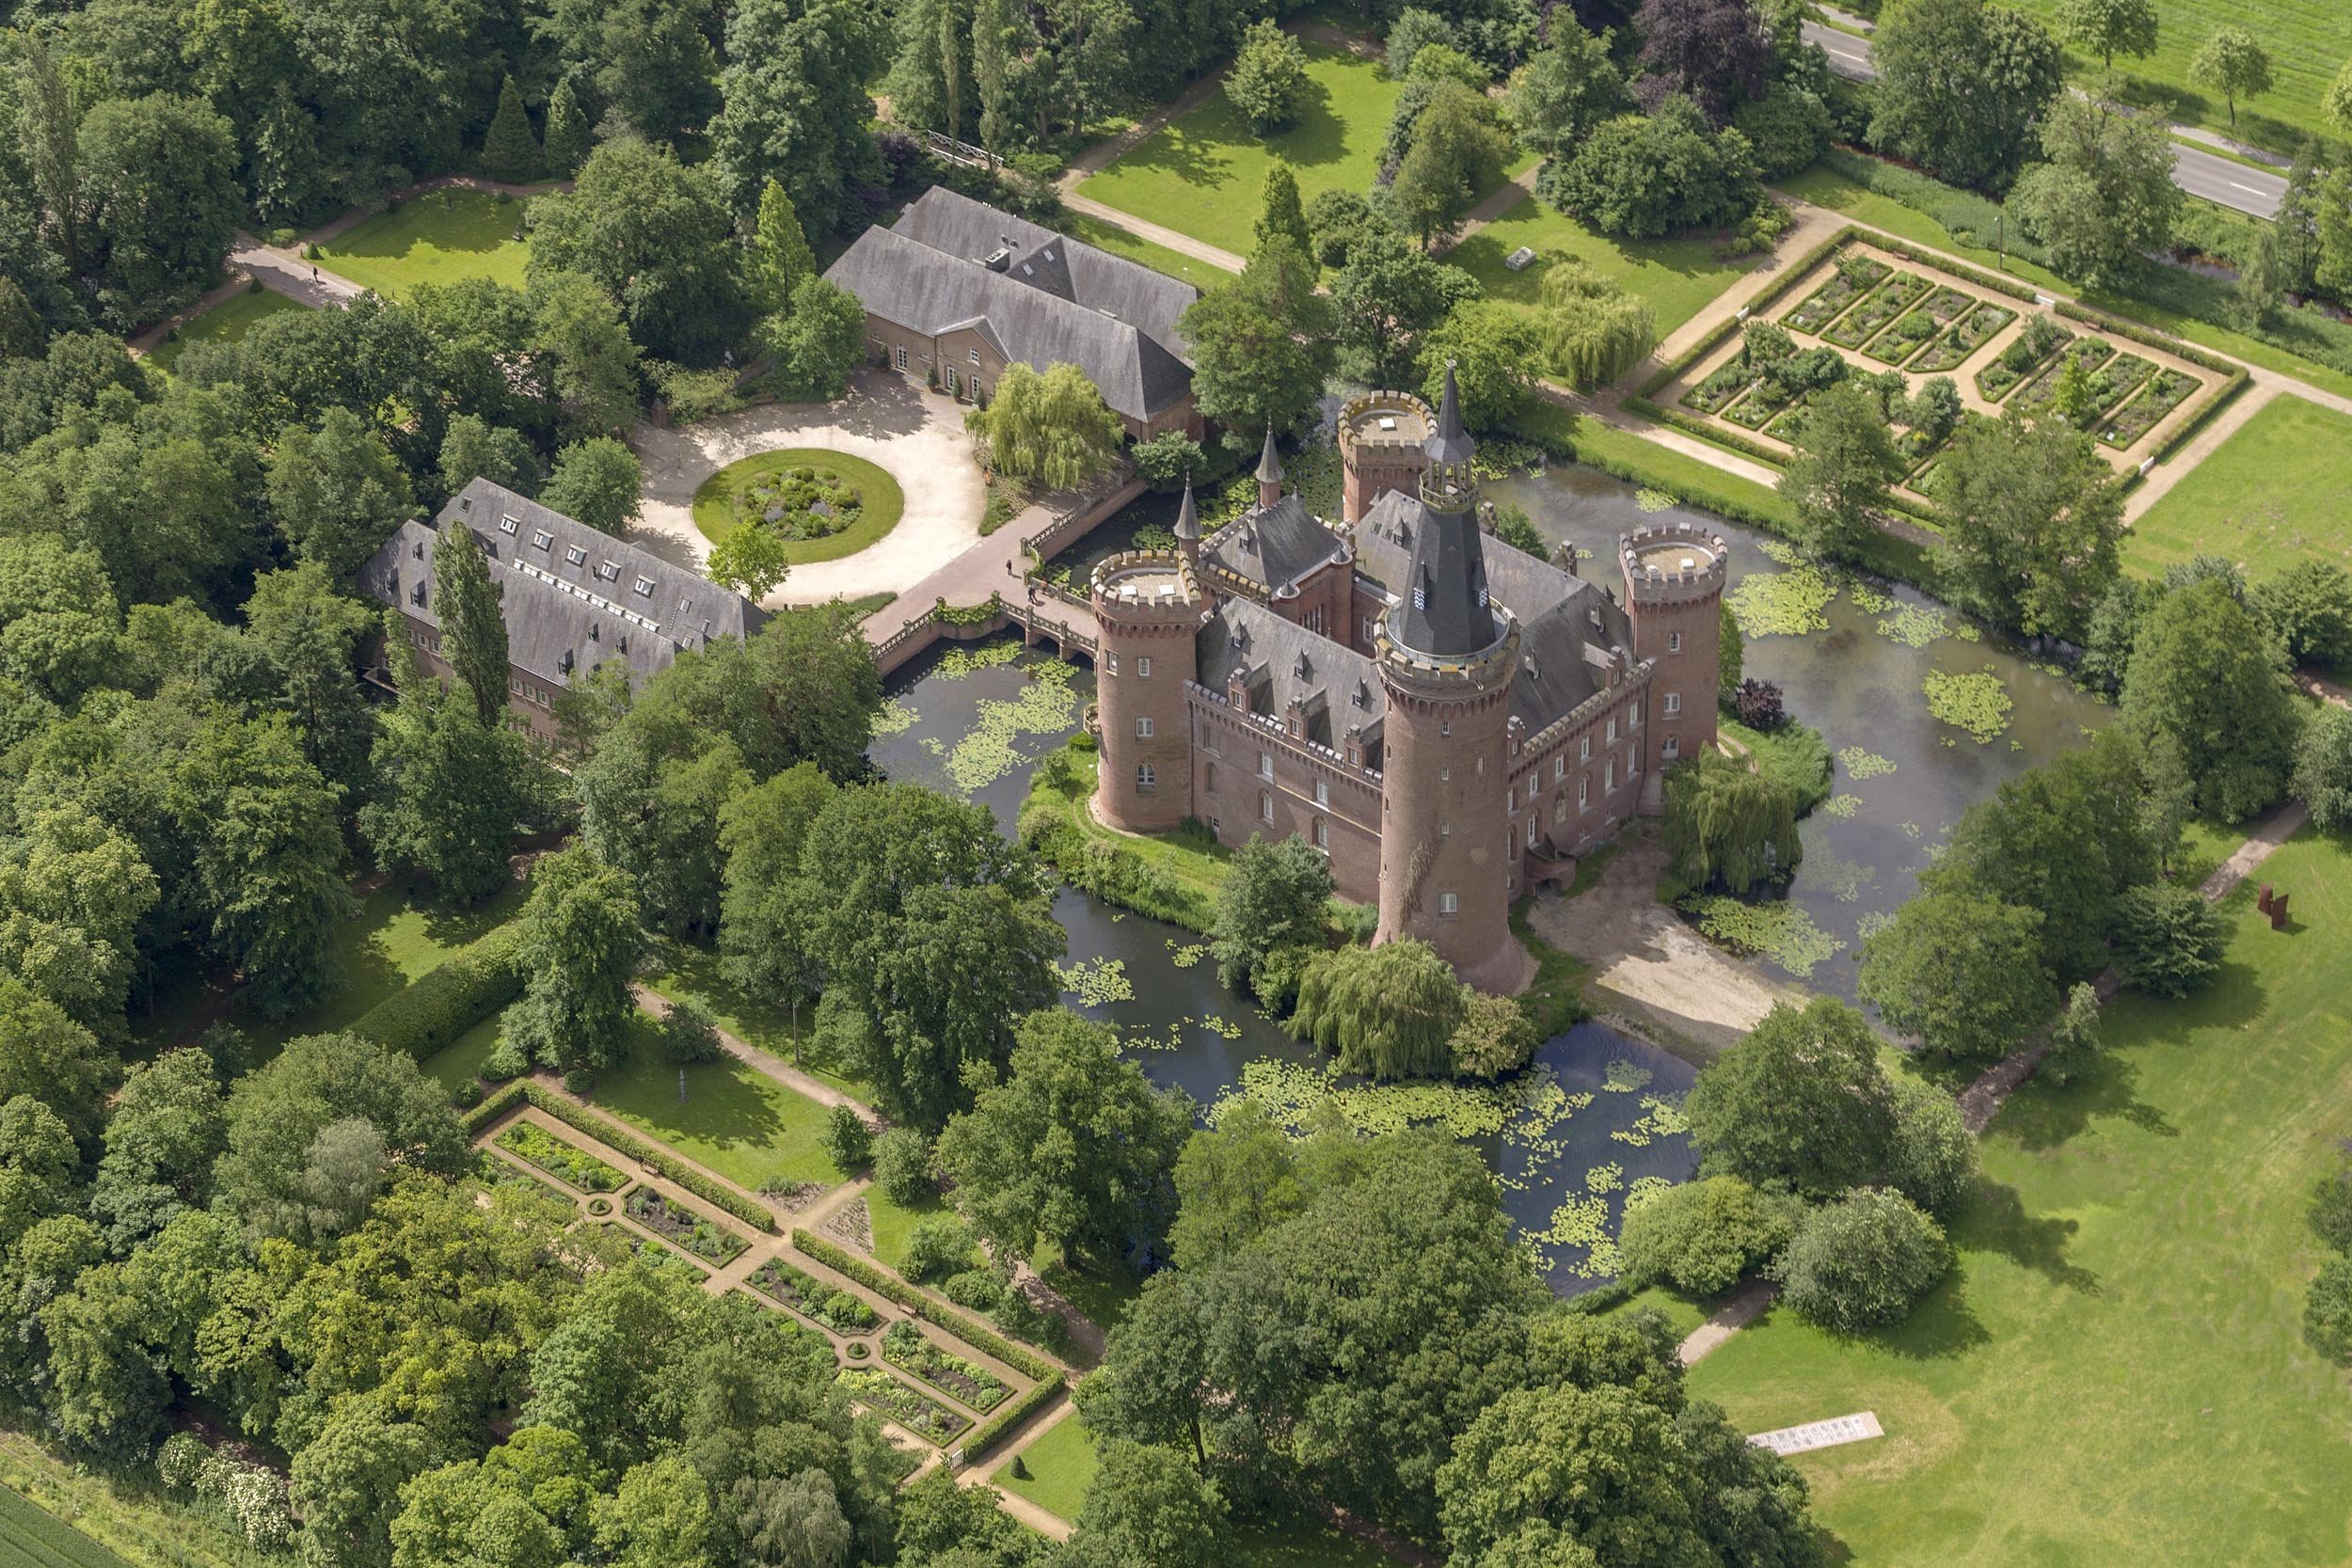 PM24-057 - Moyland - Luftaufnahme vom Museum Schloss Moyland